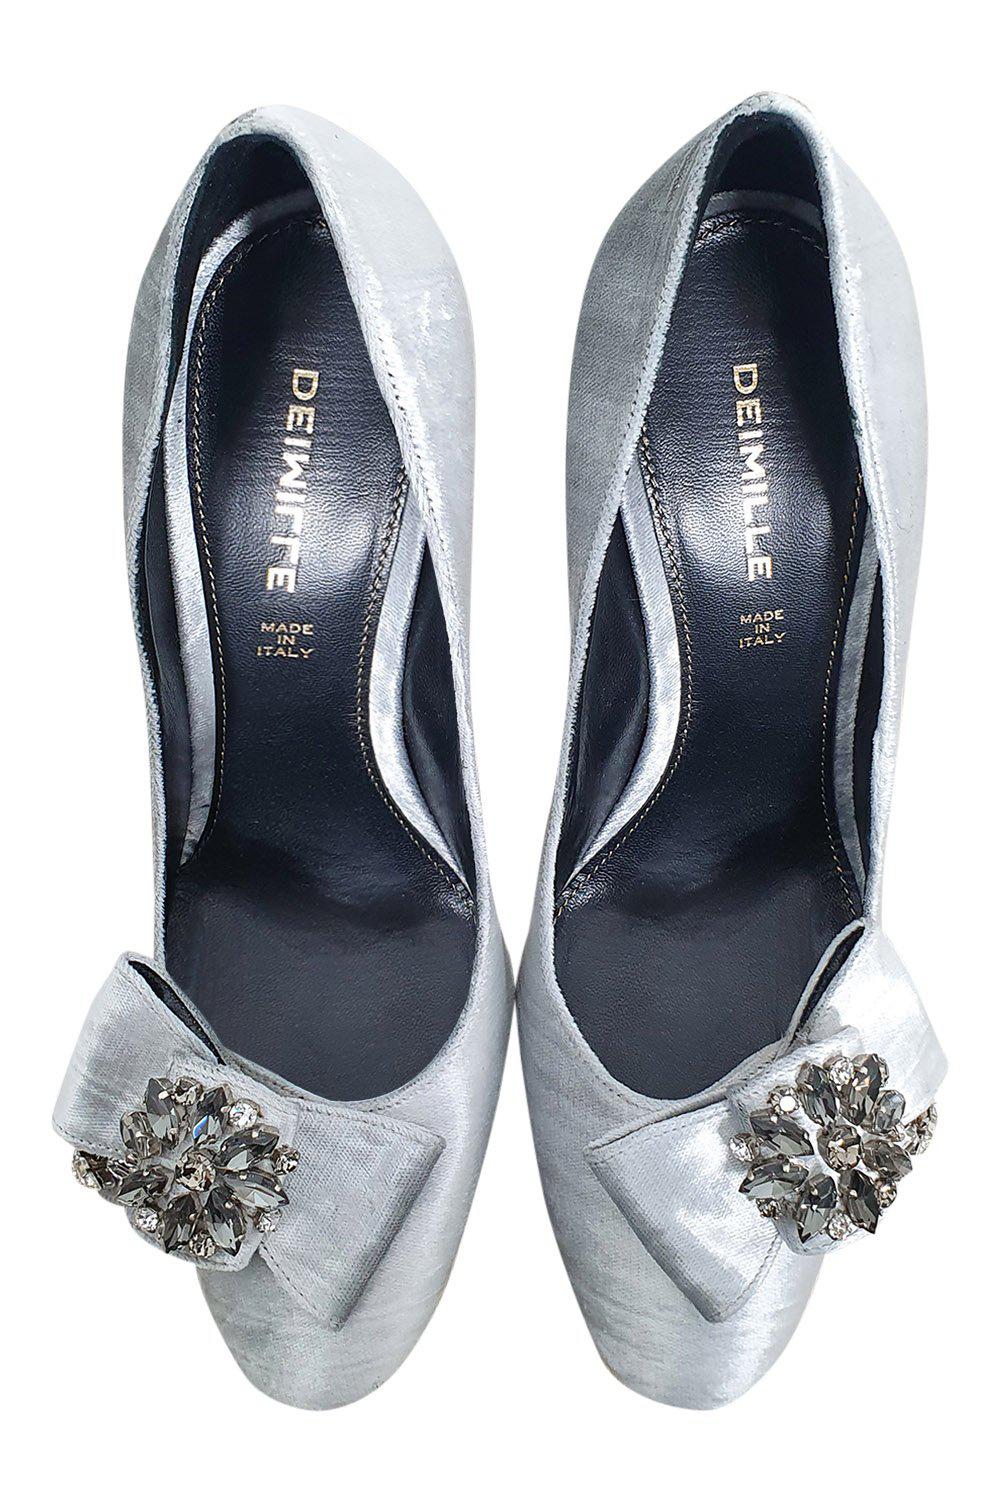 DEIMILLE Velvet Silver High Heel Crystal Embellished Pumps (40)-The Freperie